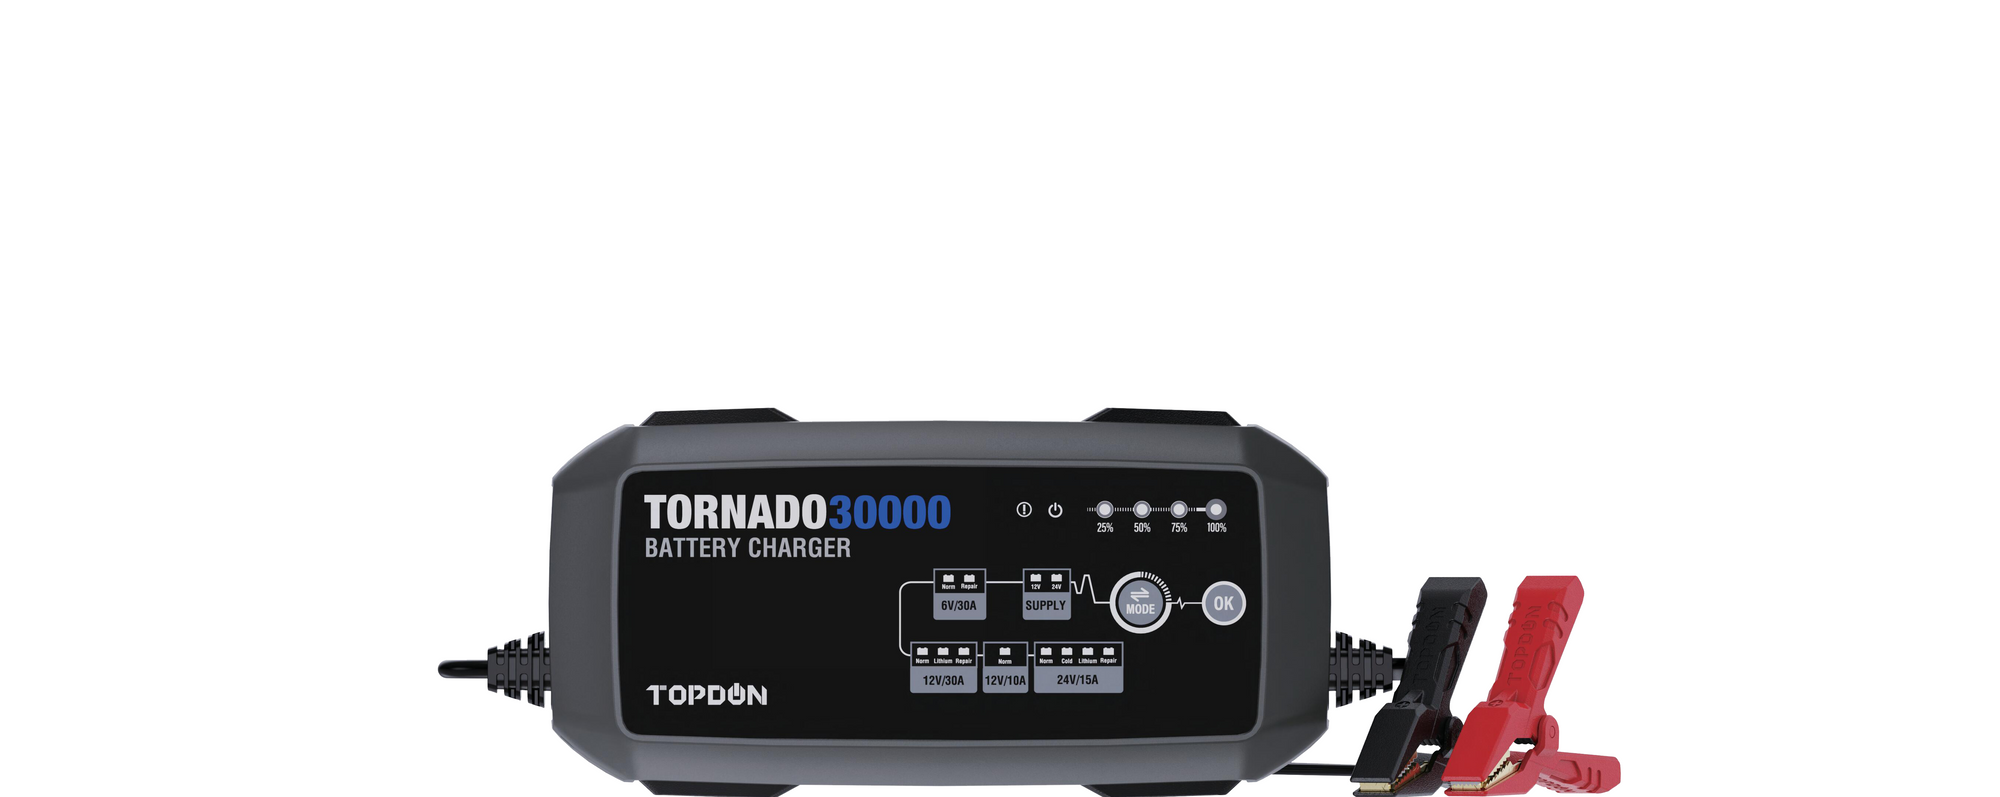 TOPDON Releases Tornado 30000